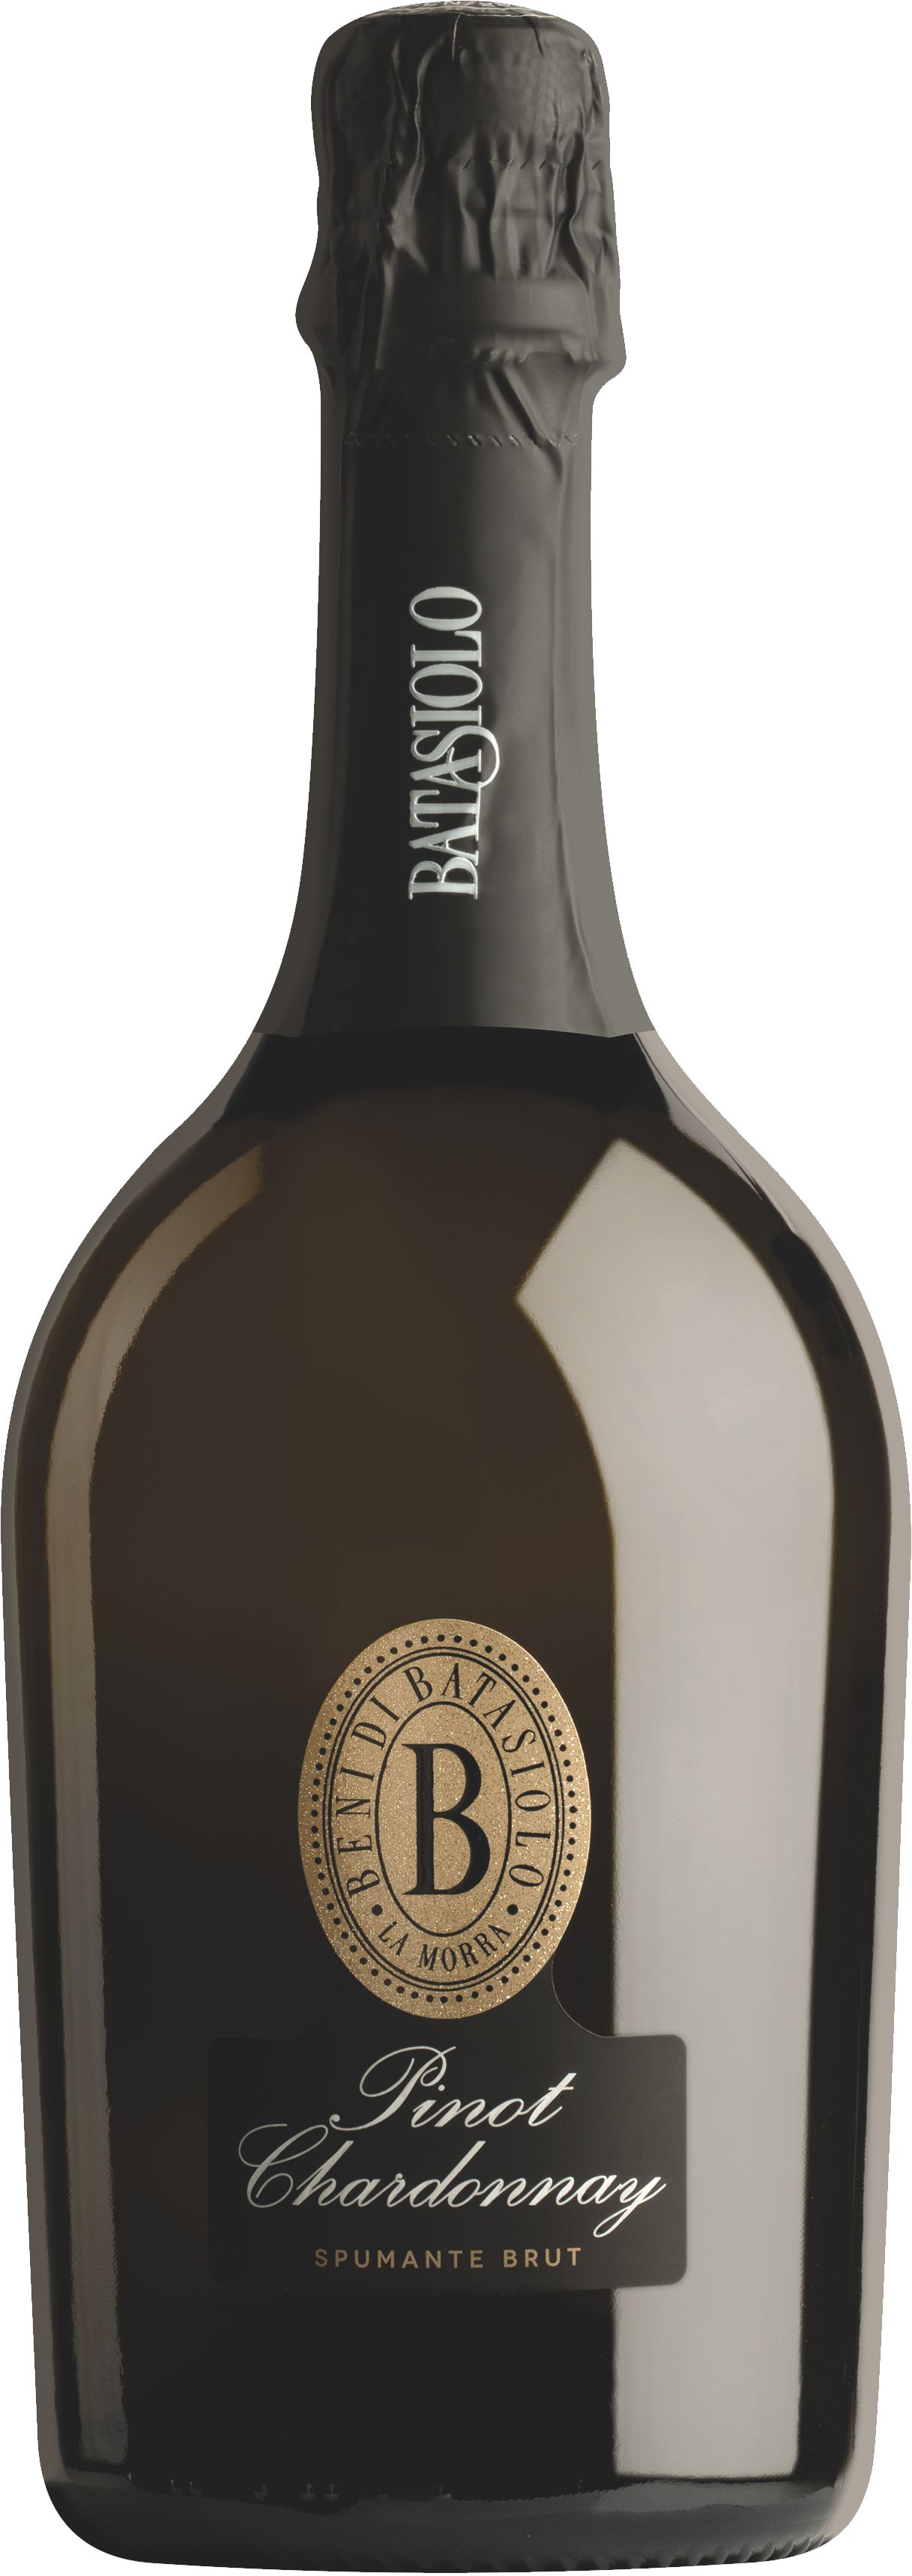 Batasiolo Pinot Chardonnay Spumante Brut 0